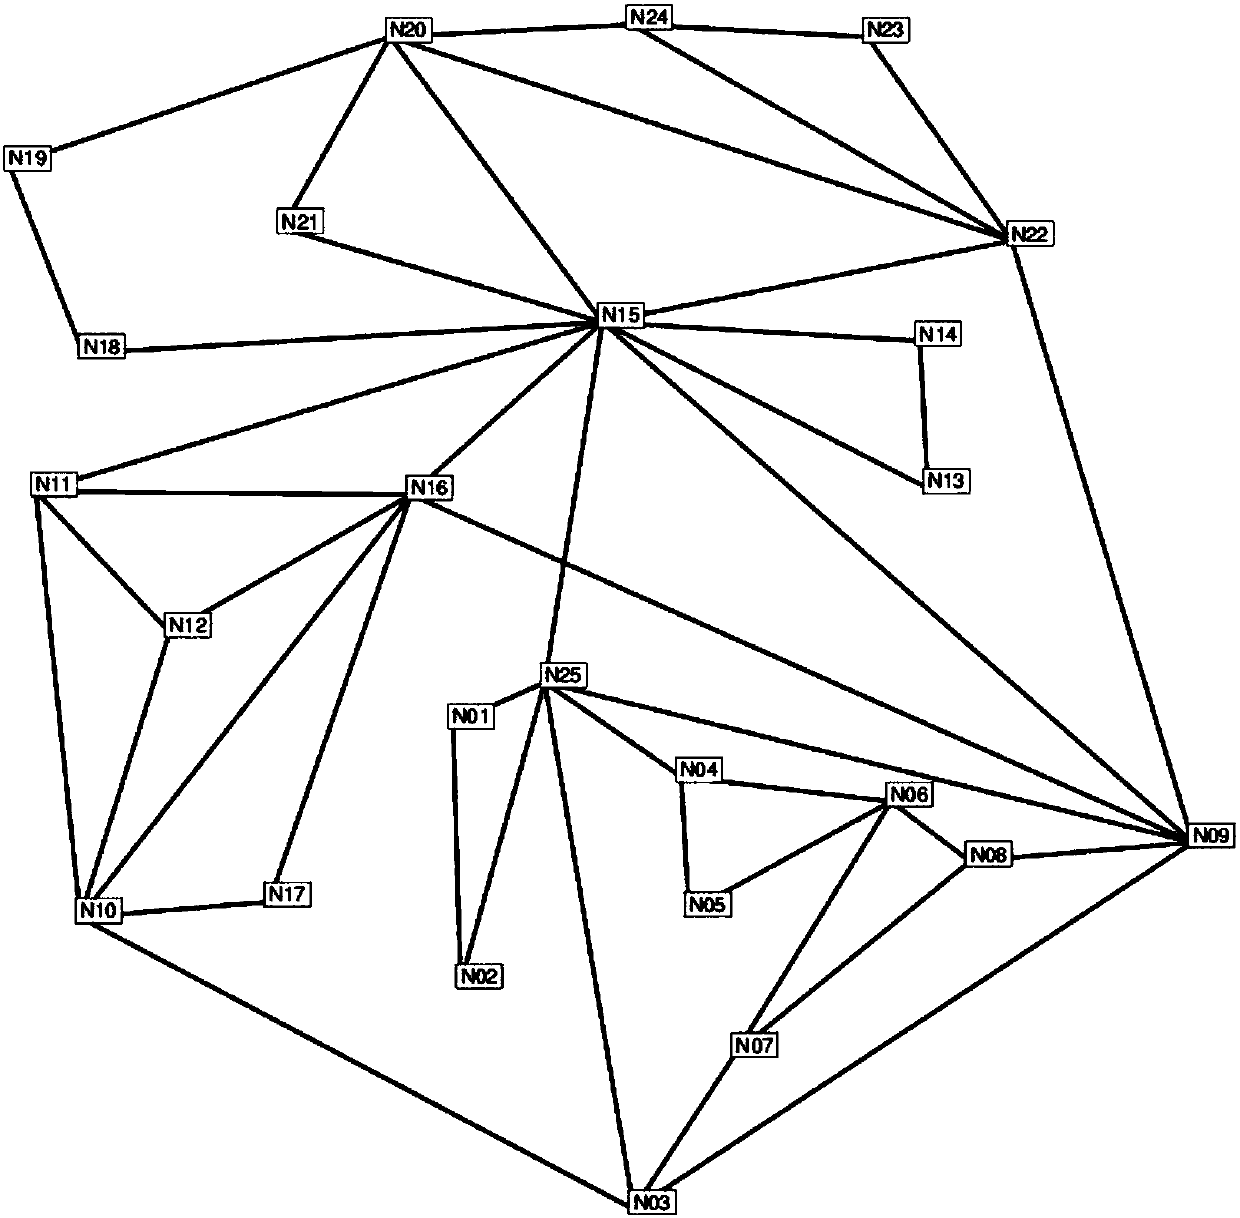 Virtual network function deployment method based on grey wolf algorithm